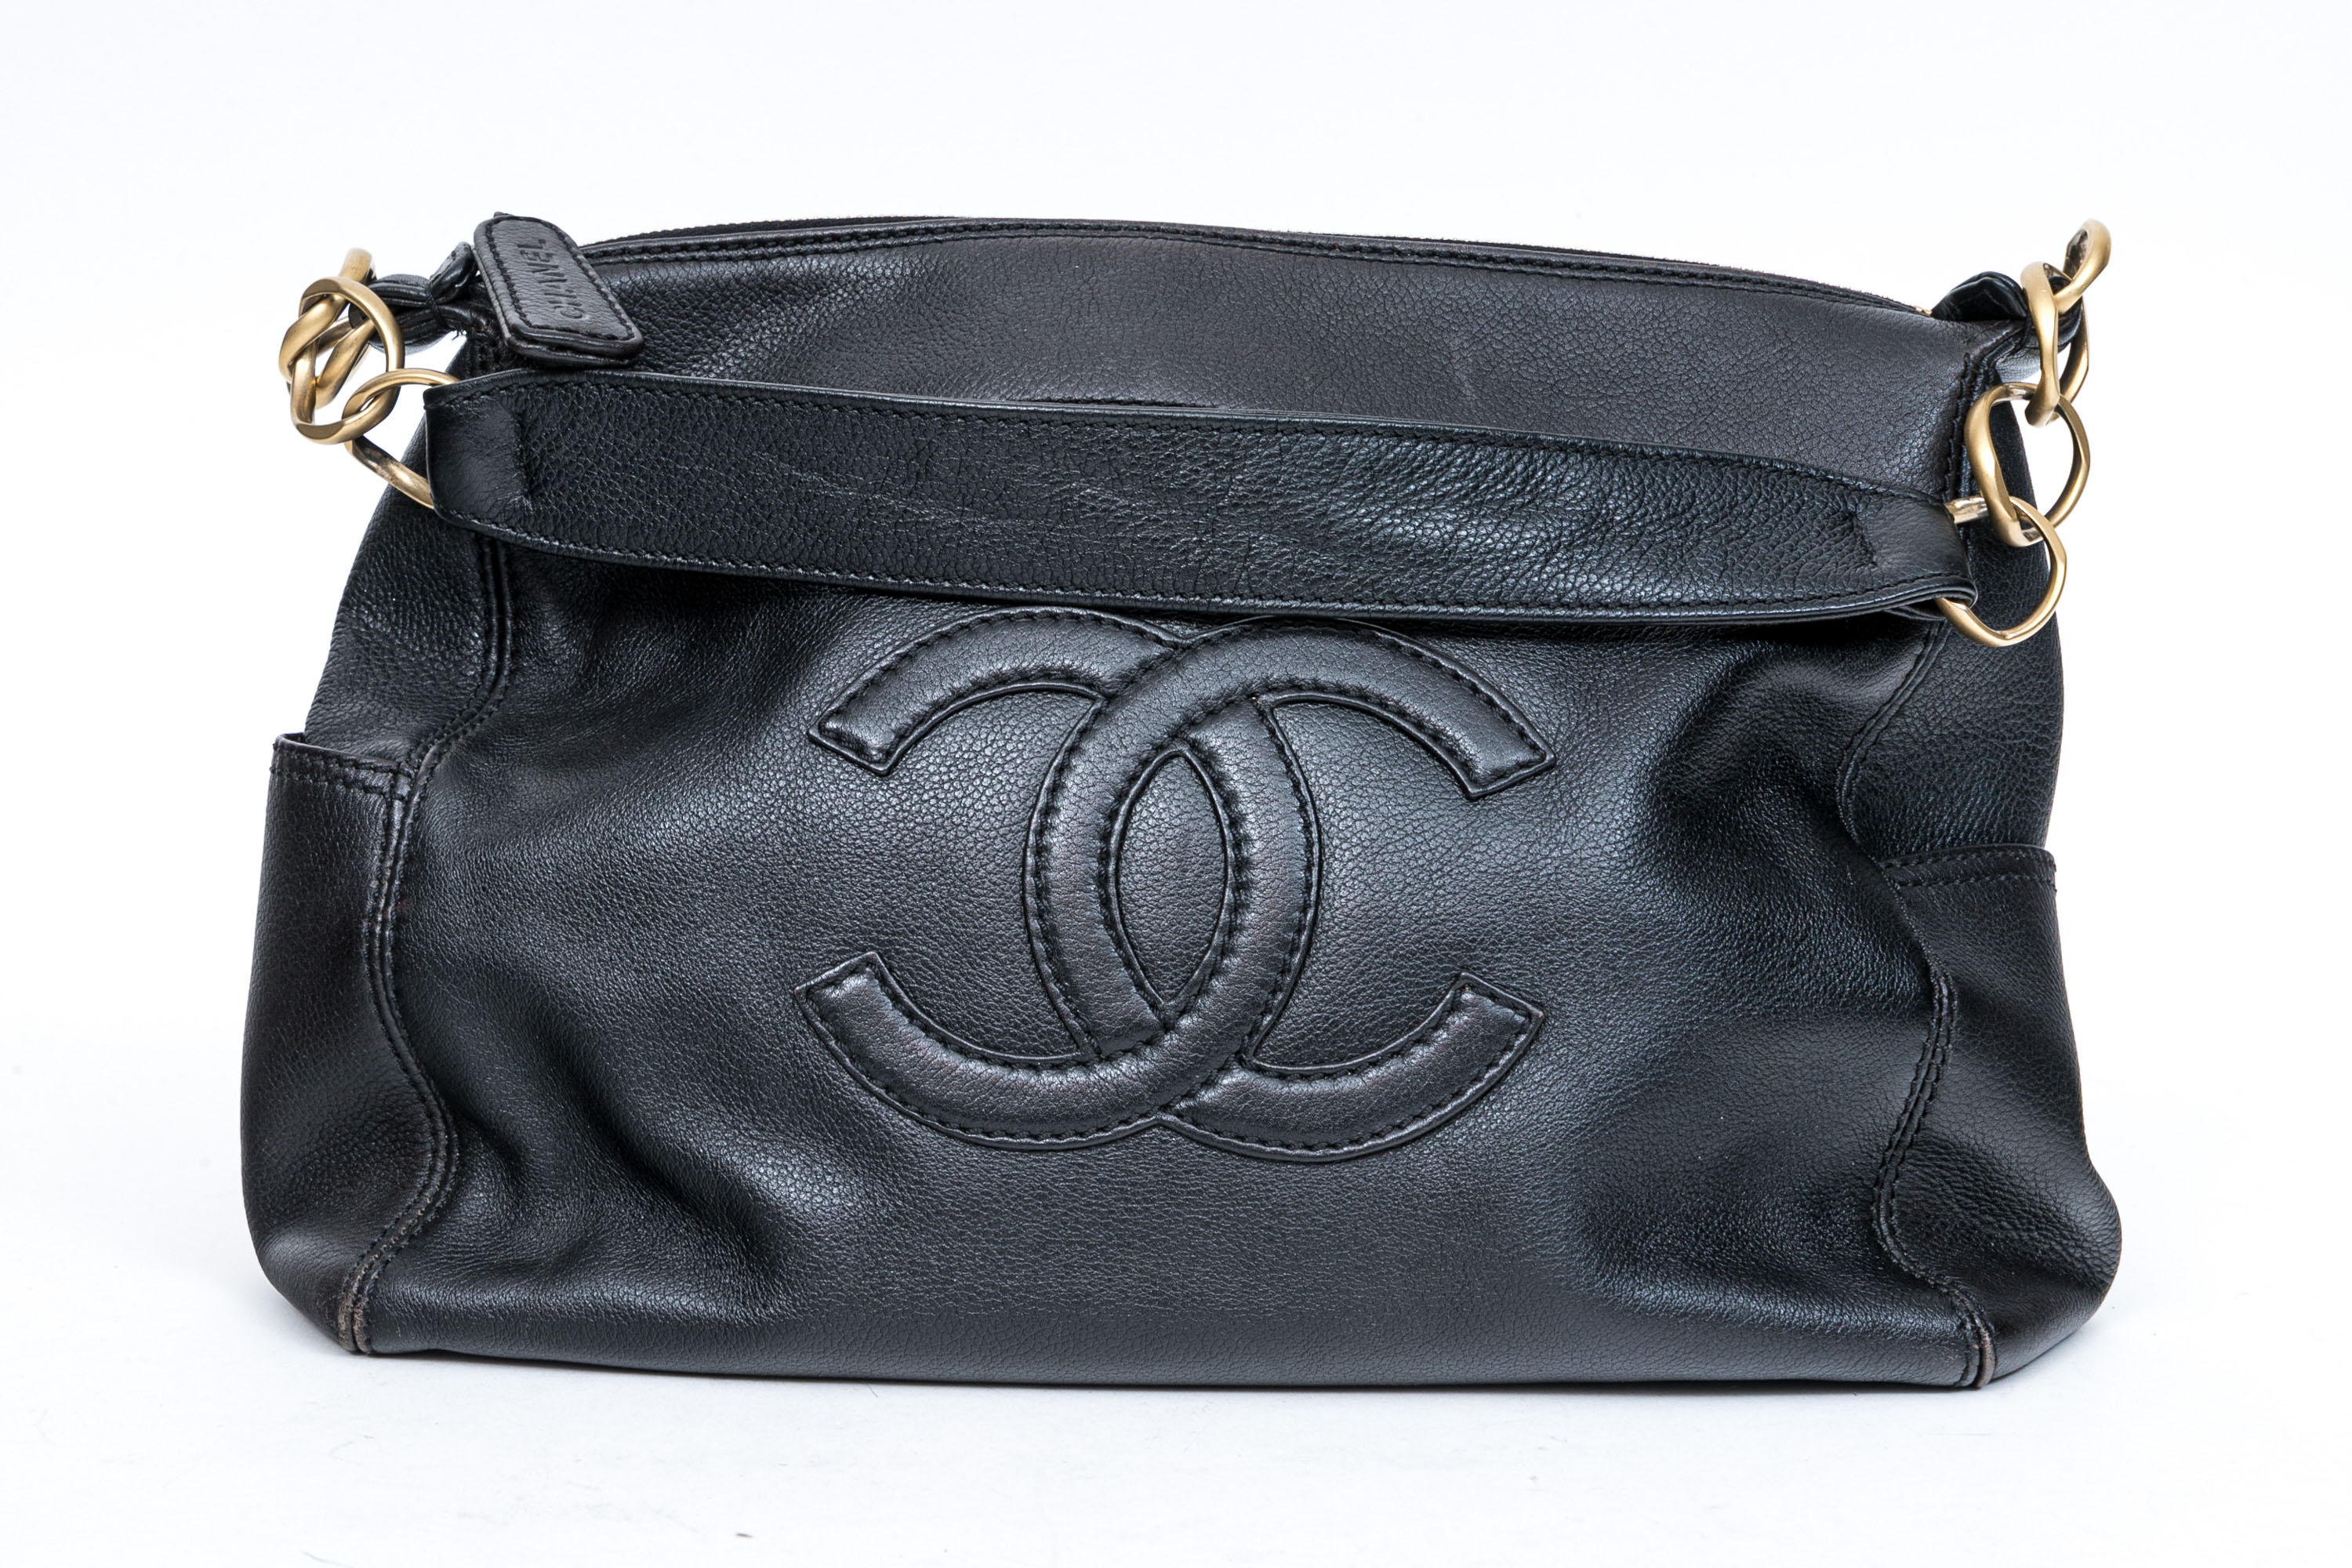 Chanel Black Caviar Leather Bag #297750 | Black Rock Galleries